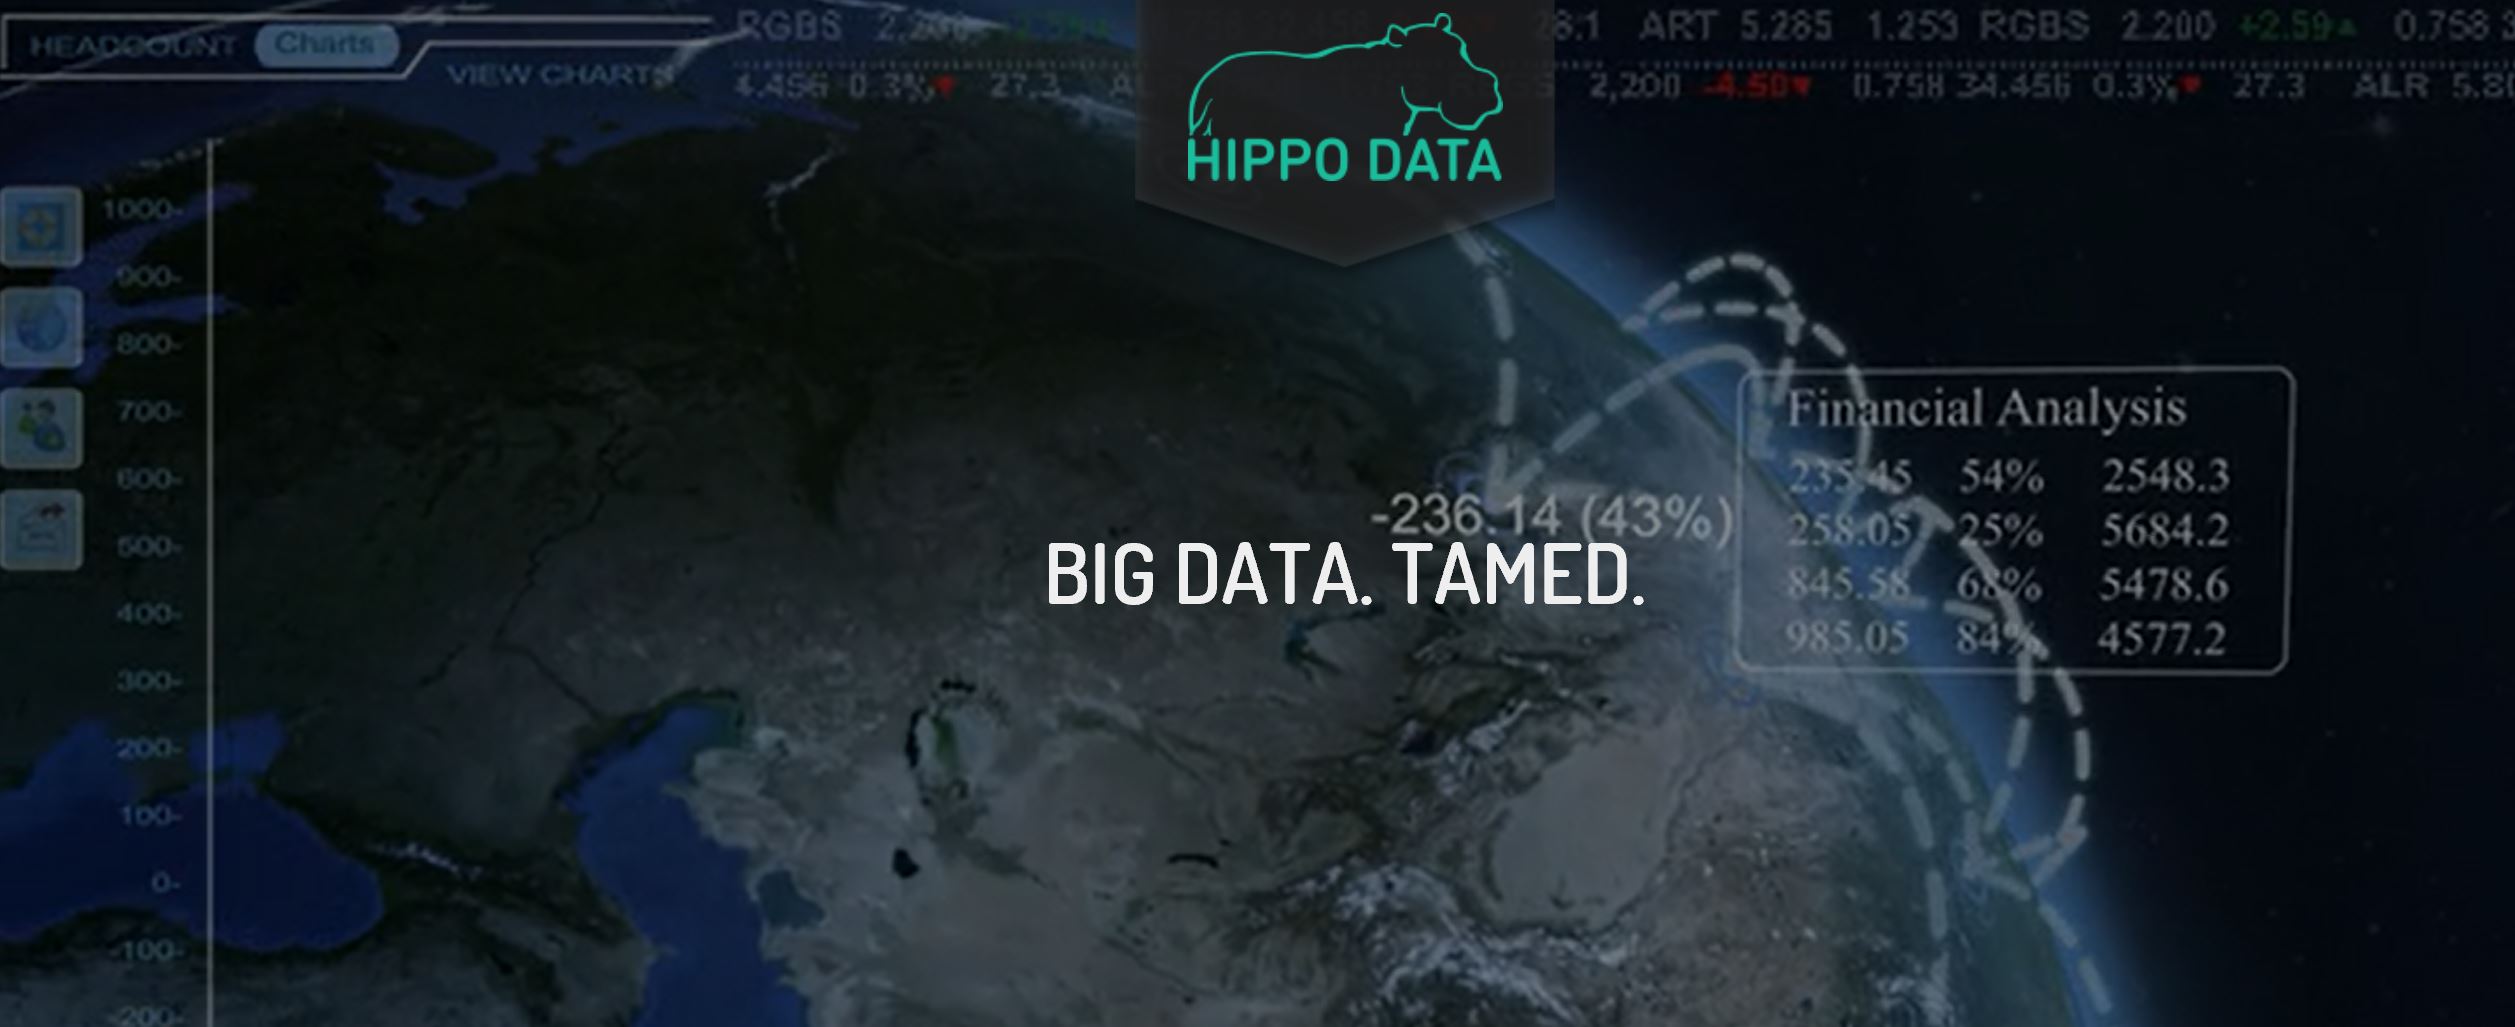 Hippo Data